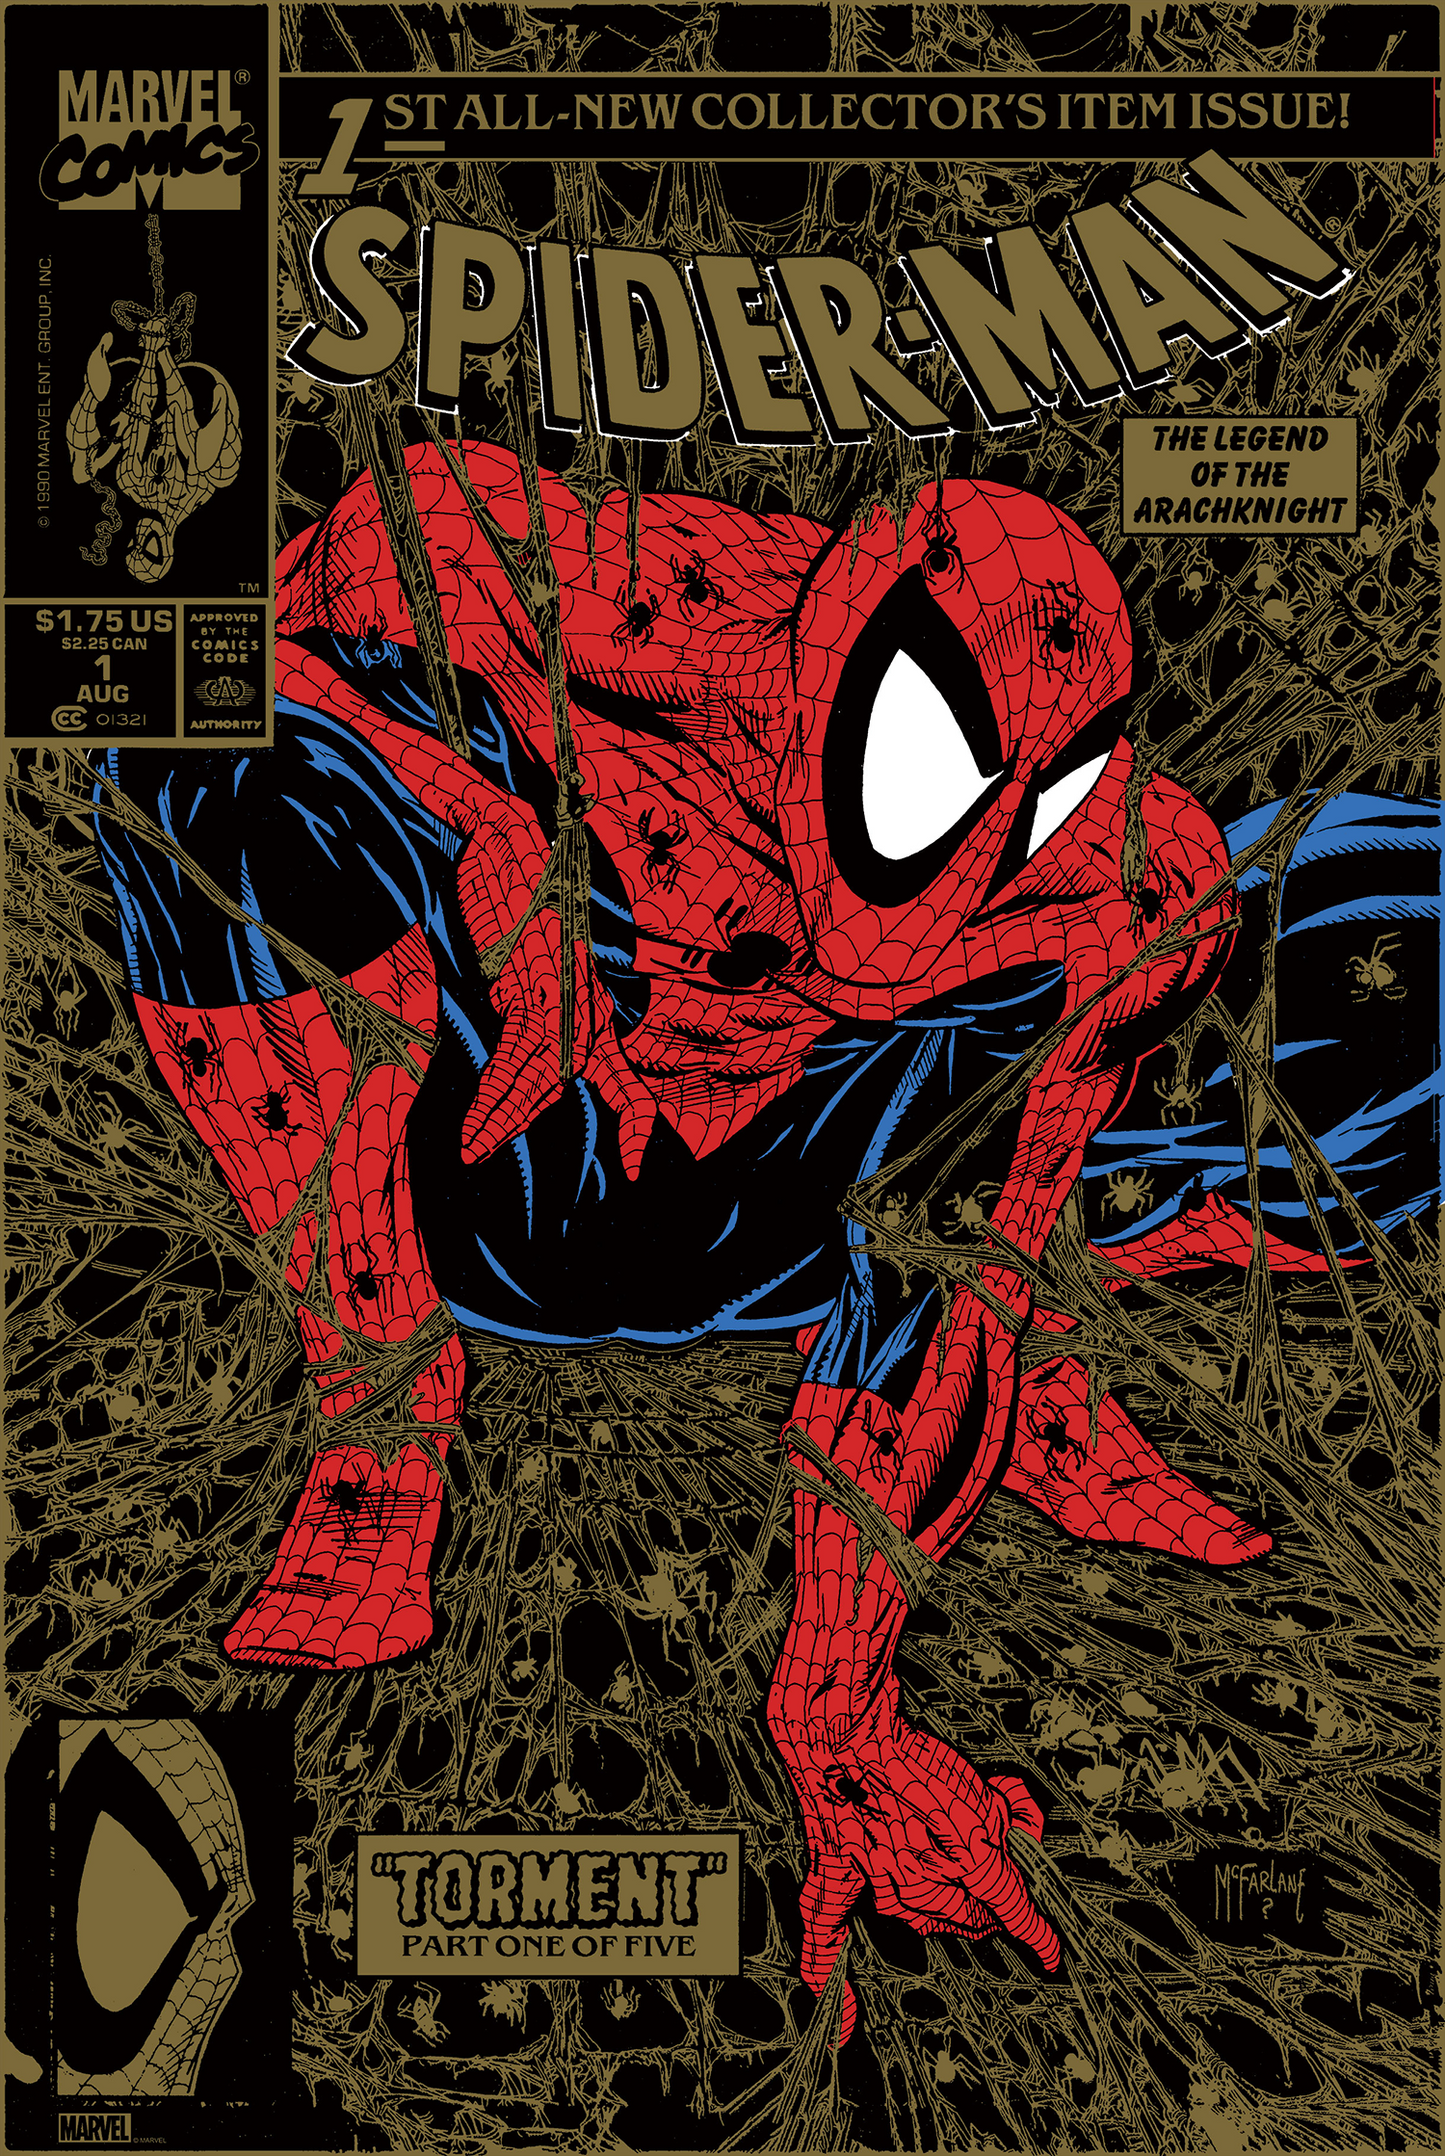 Todd McFarlane "Spider-Man #1" Gold Variant